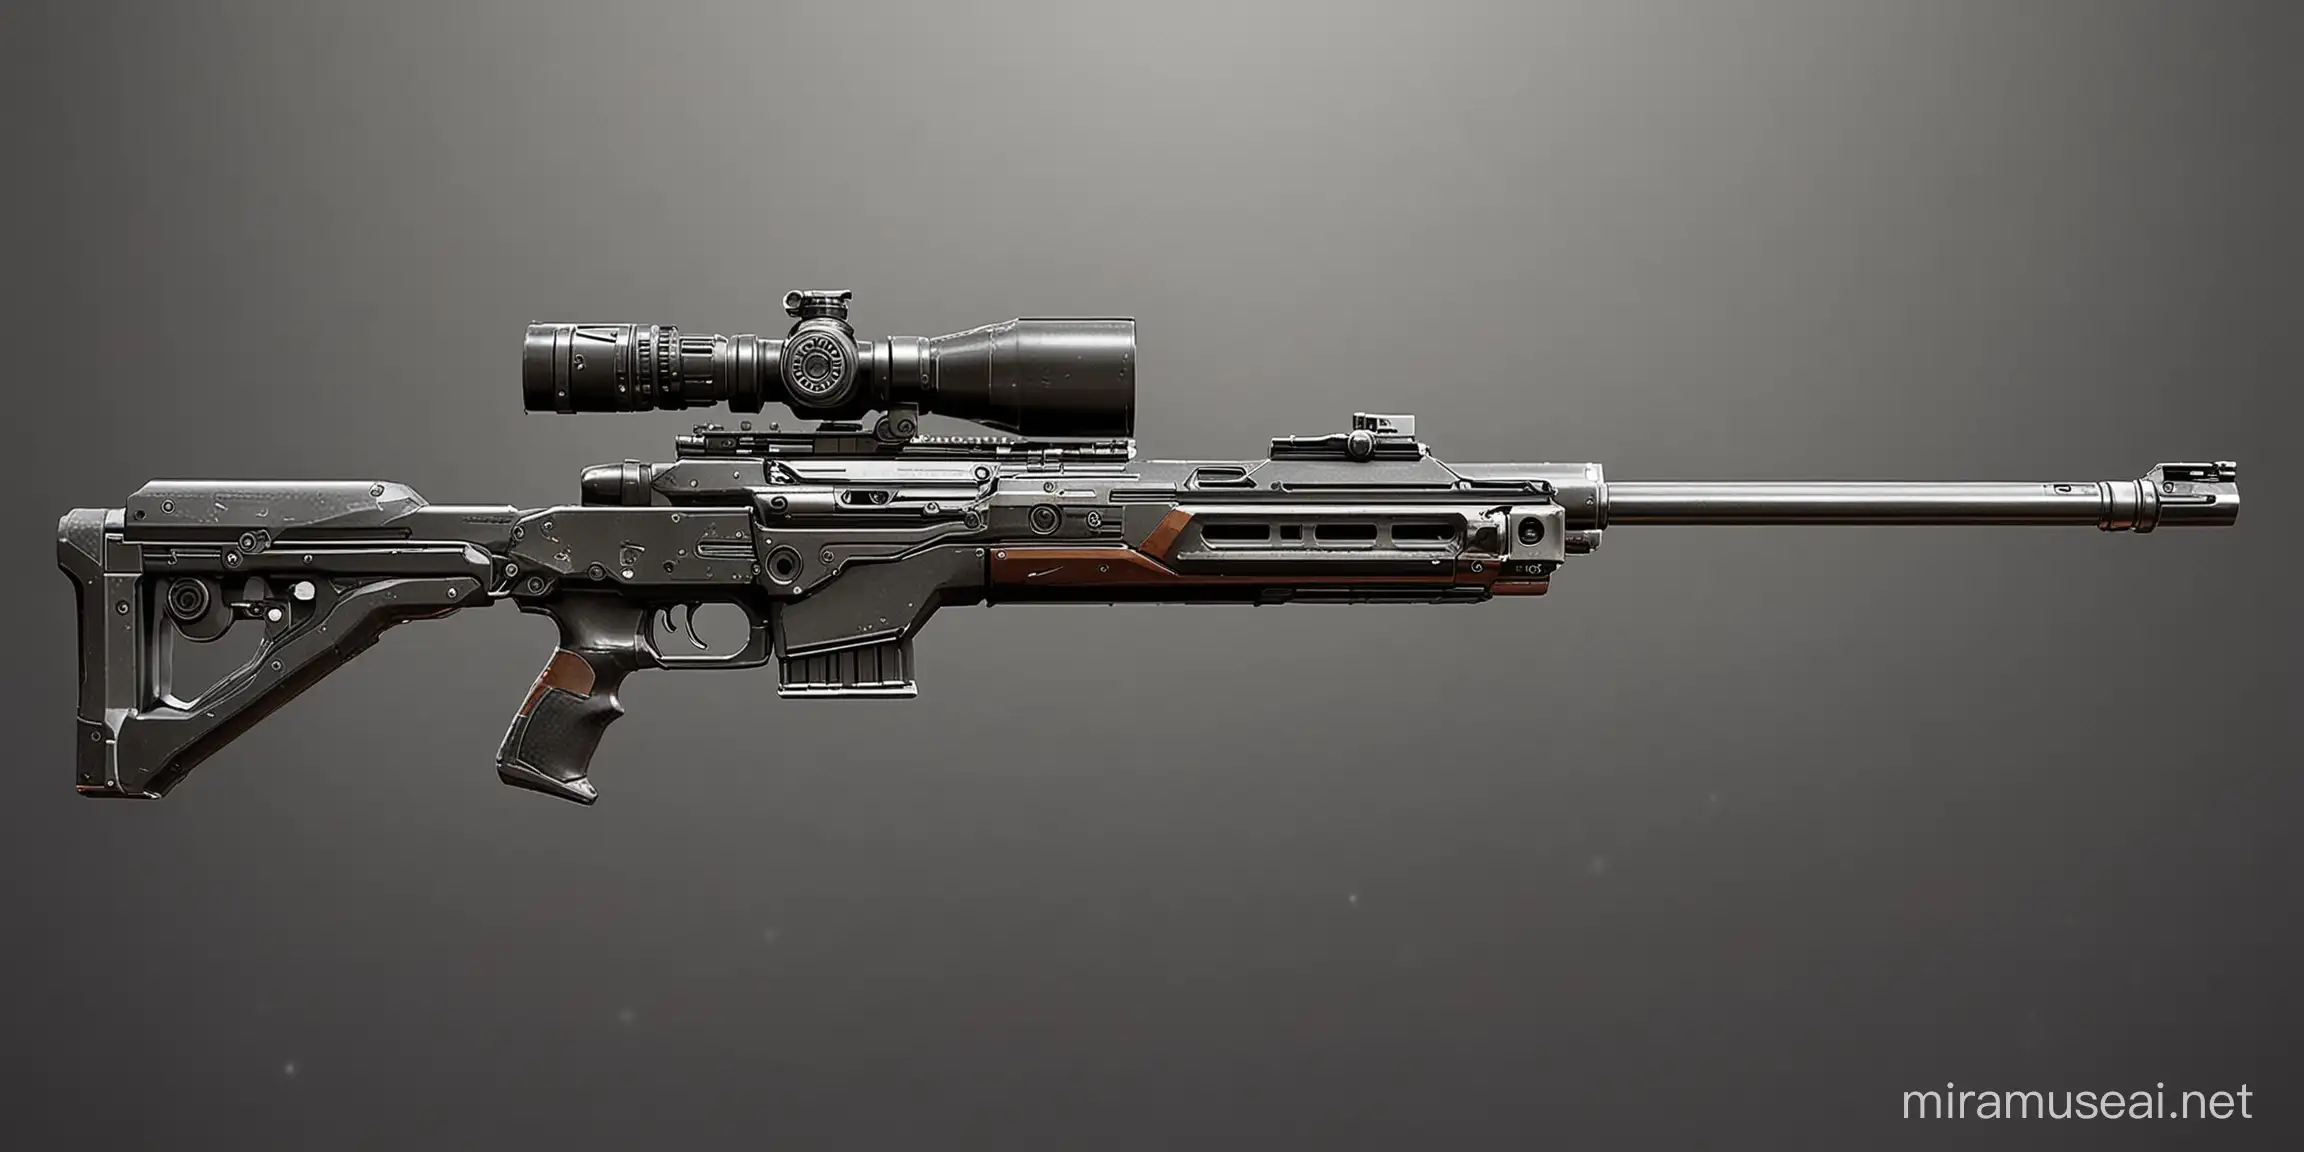 Dynamic Destiny 2 Sniper Rifle Battle in SciFi Setting